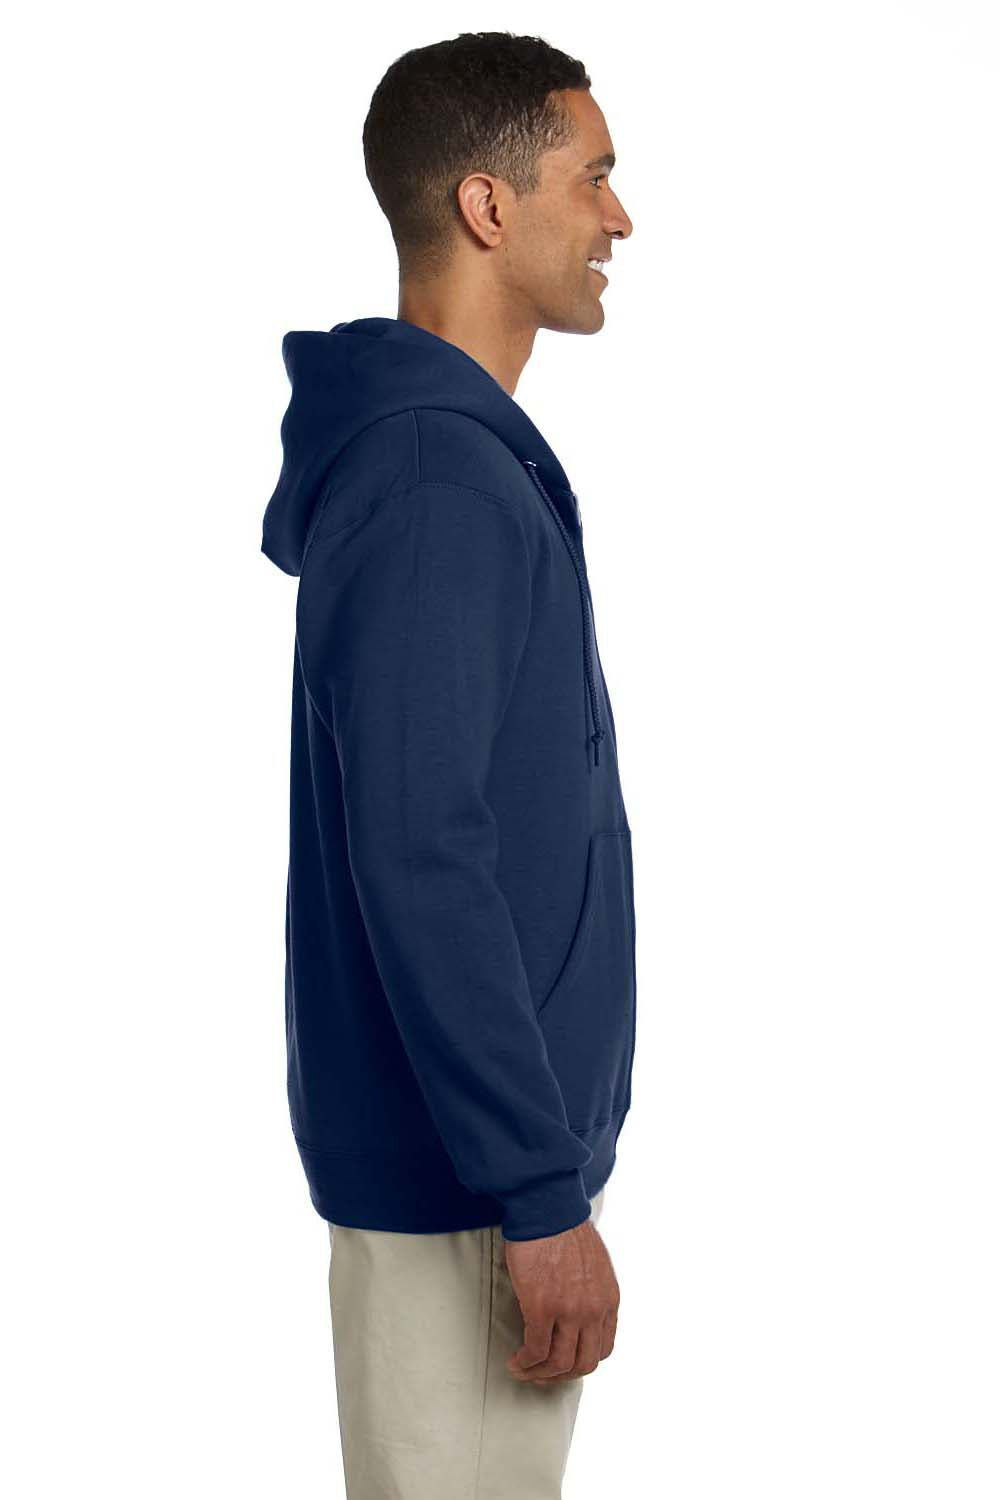 Jerzees 4999 Mens Super Sweats NuBlend Fleece Full Zip Hooded Sweatshirt Hoodie Navy Blue Side